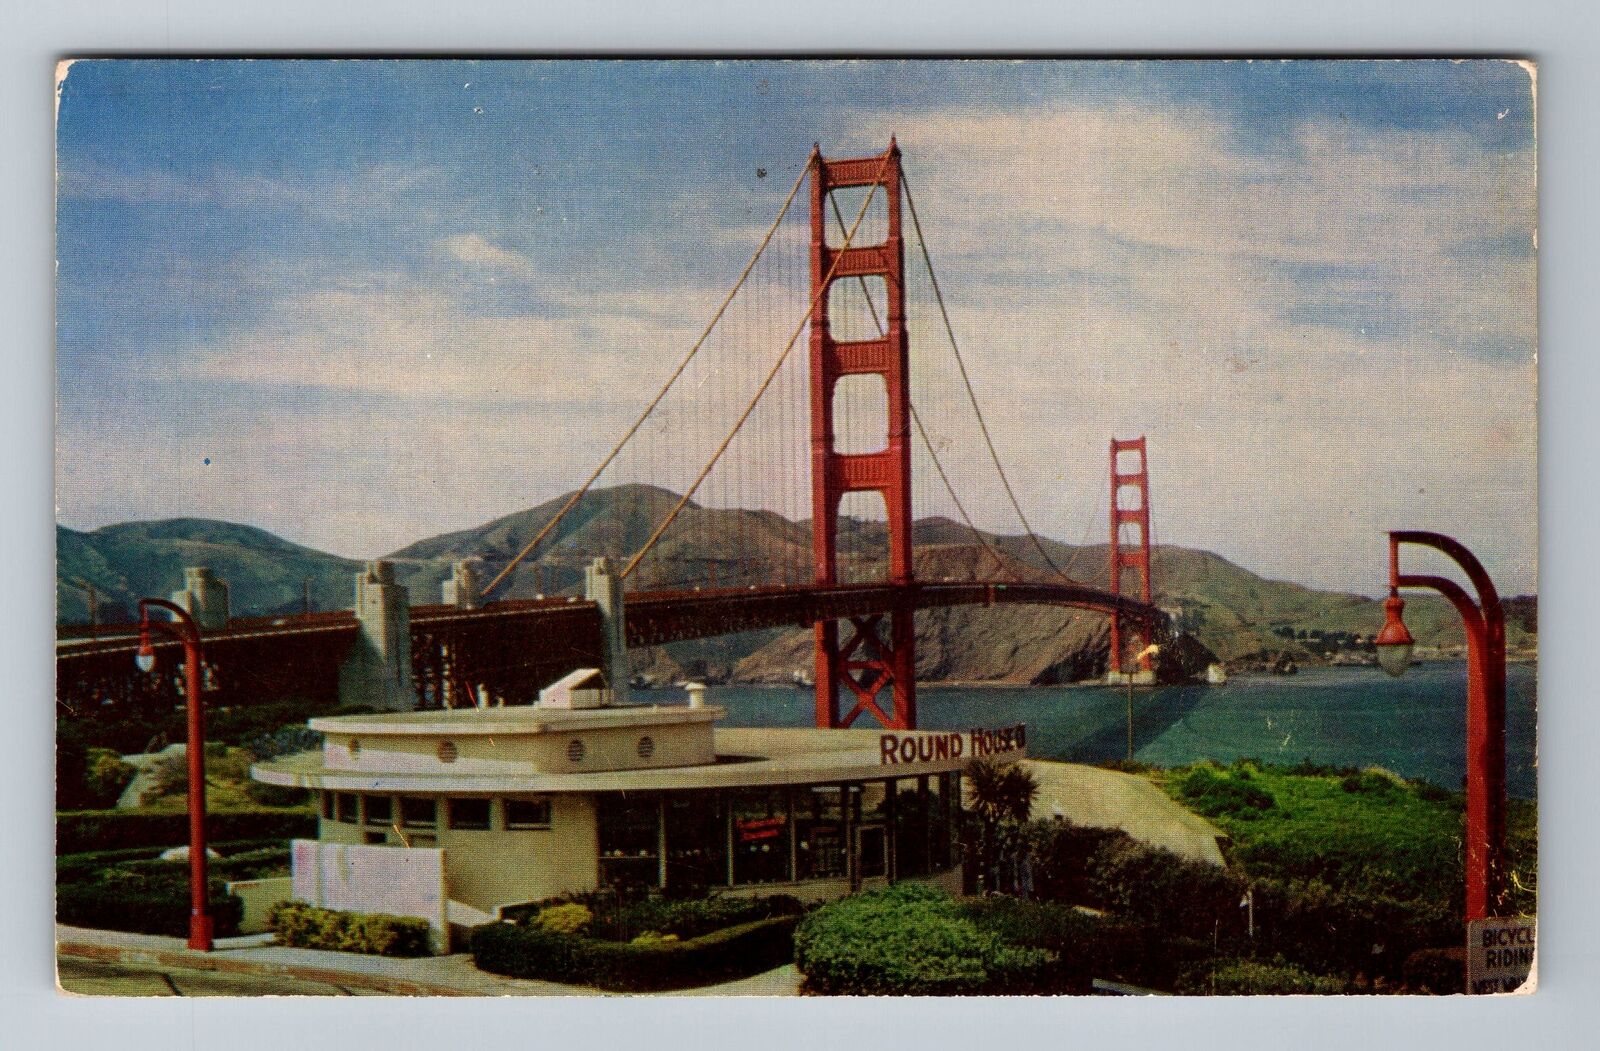 San Francisco CA-California, Round House Restaurant Toll Plaza Vintage Postcard